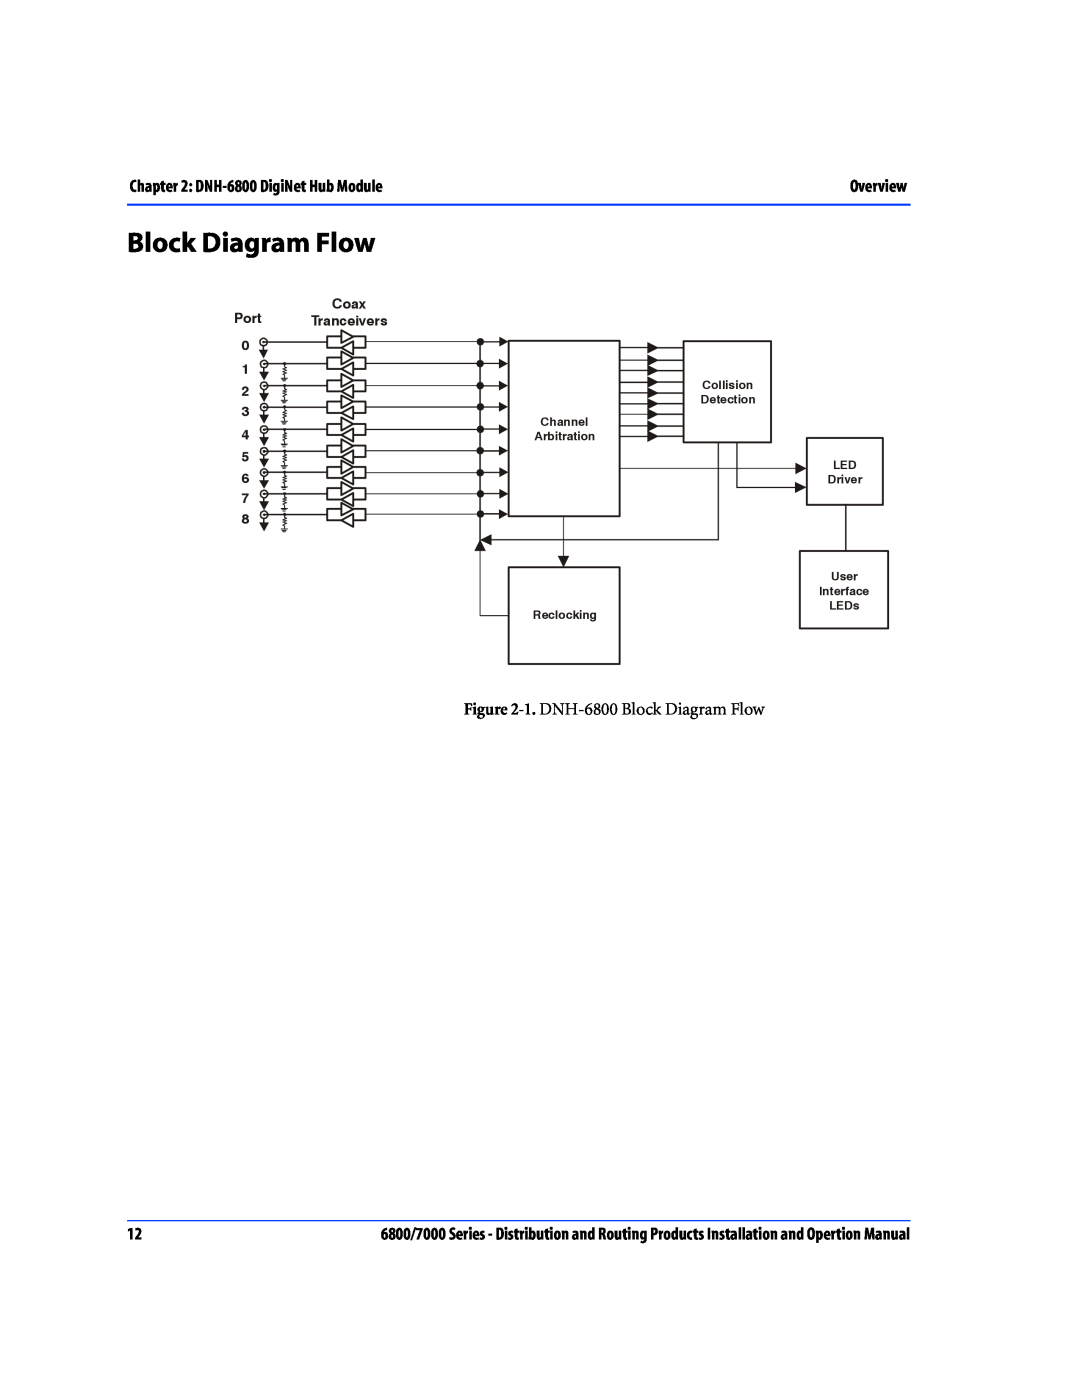 Nokia 7000 Series Block Diagram Flow, DNH-6800 DigiNet Hub Module, Coax Port Tranceivers 0 1 2 3 4 5 6 7, Overview, LEDs 